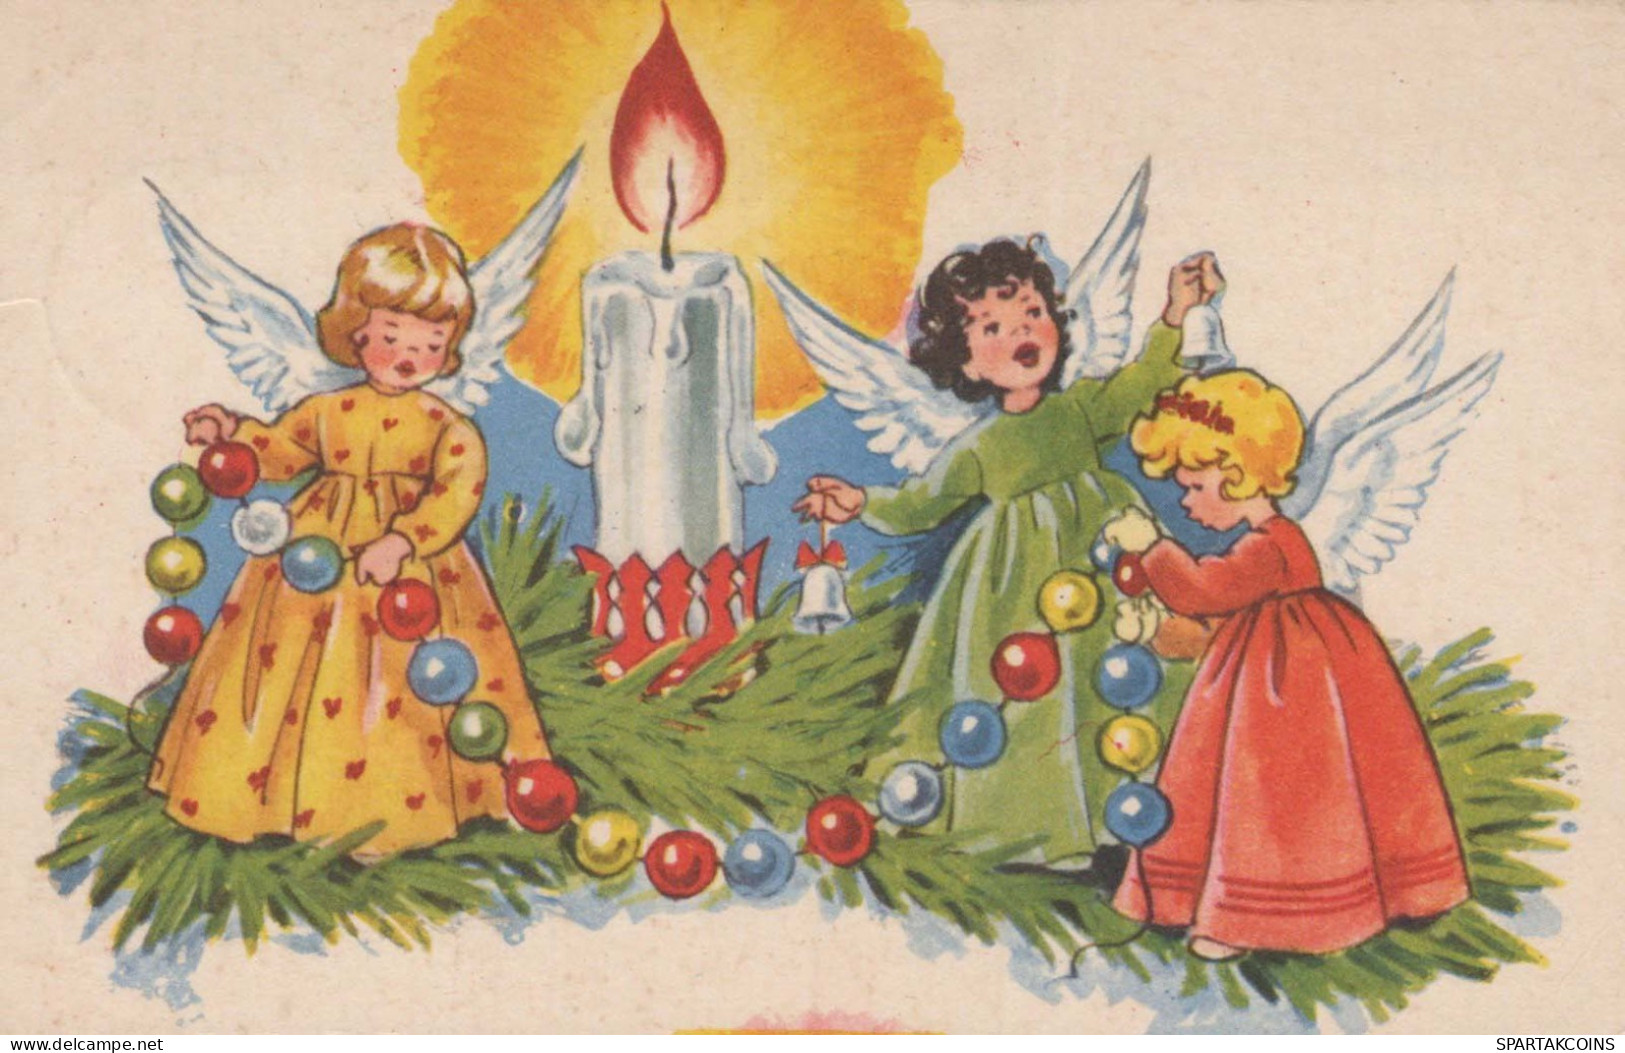 ANGELO Natale Vintage Cartolina CPA #PKE132.IT - Angels